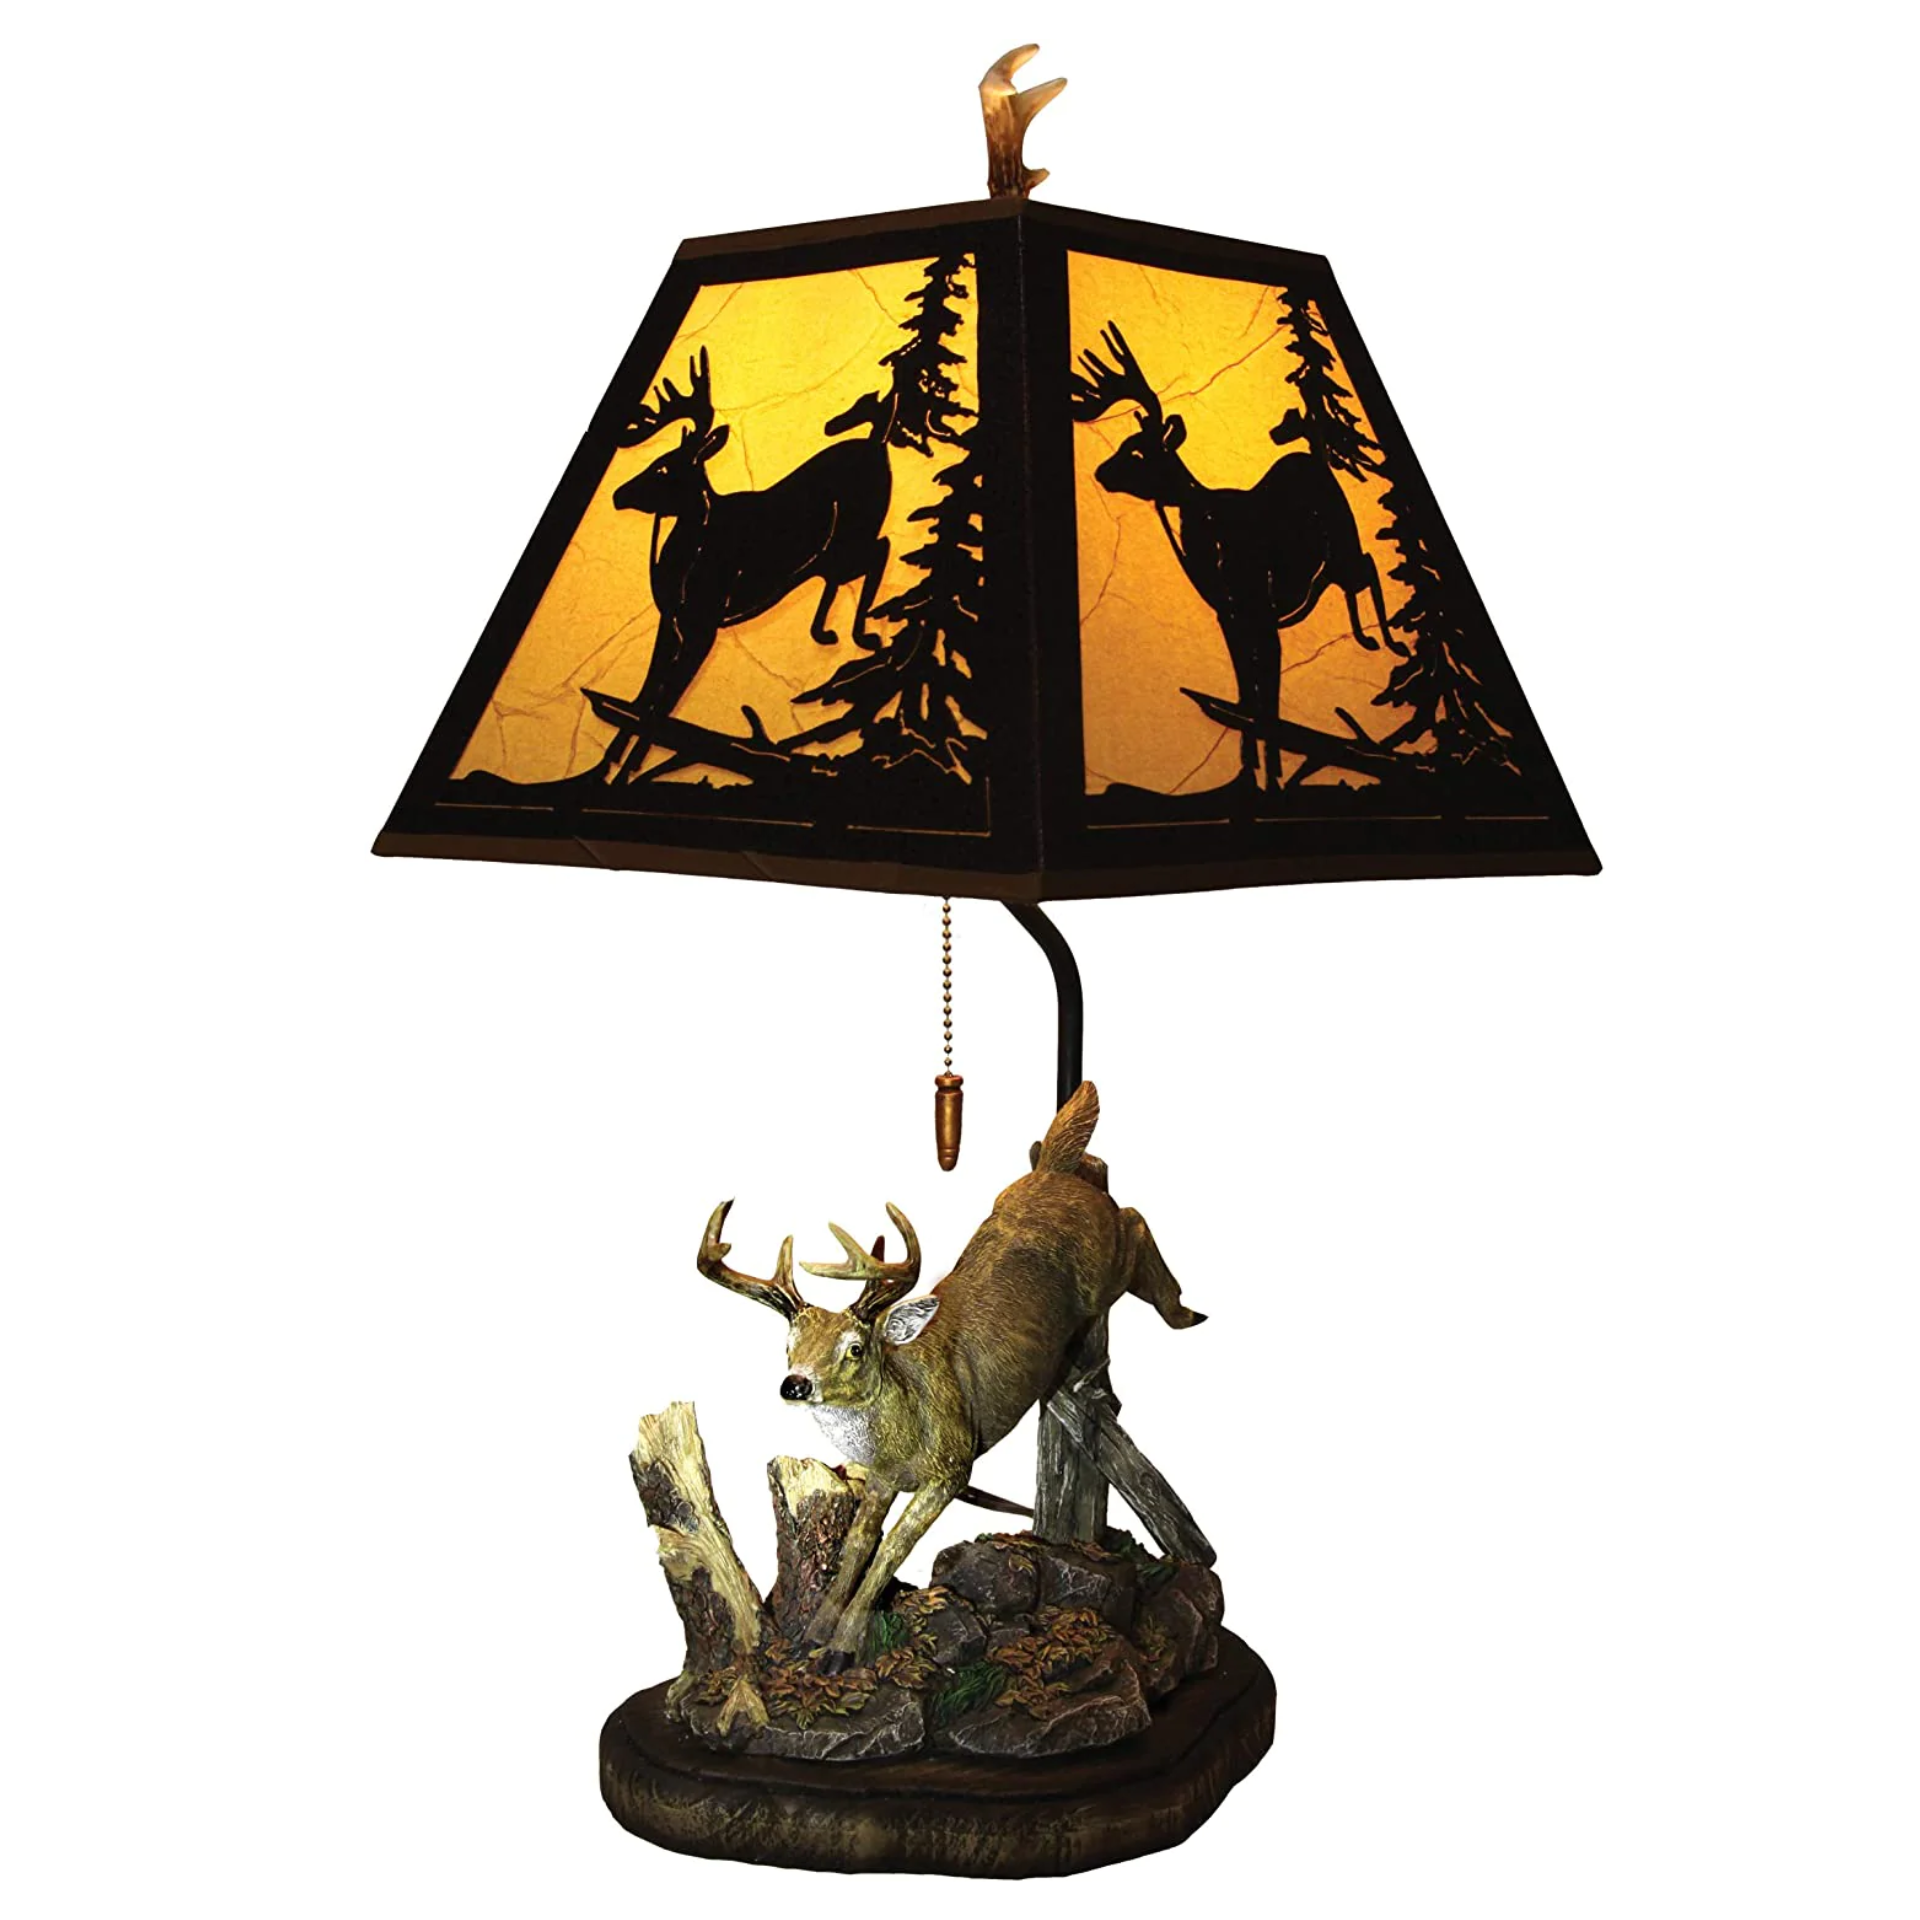 Rivers Edge Products Table Lamp - Deer Metal Shade